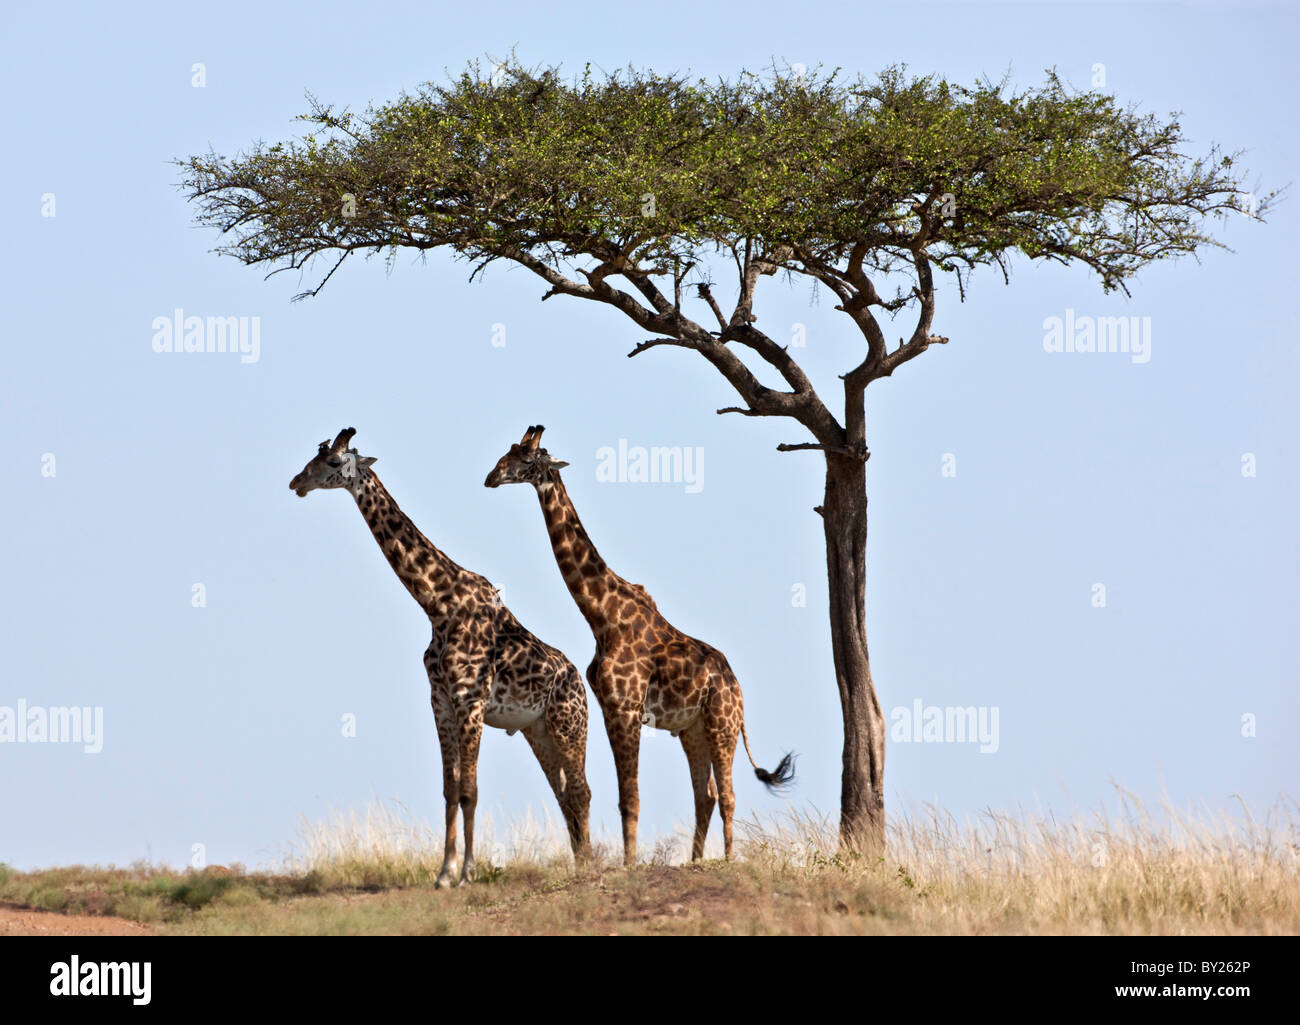 Two Maasai giraffes shade themselves beneath a Balanites tree on the plains of the Masai Mara National Reserve. Stock Photo